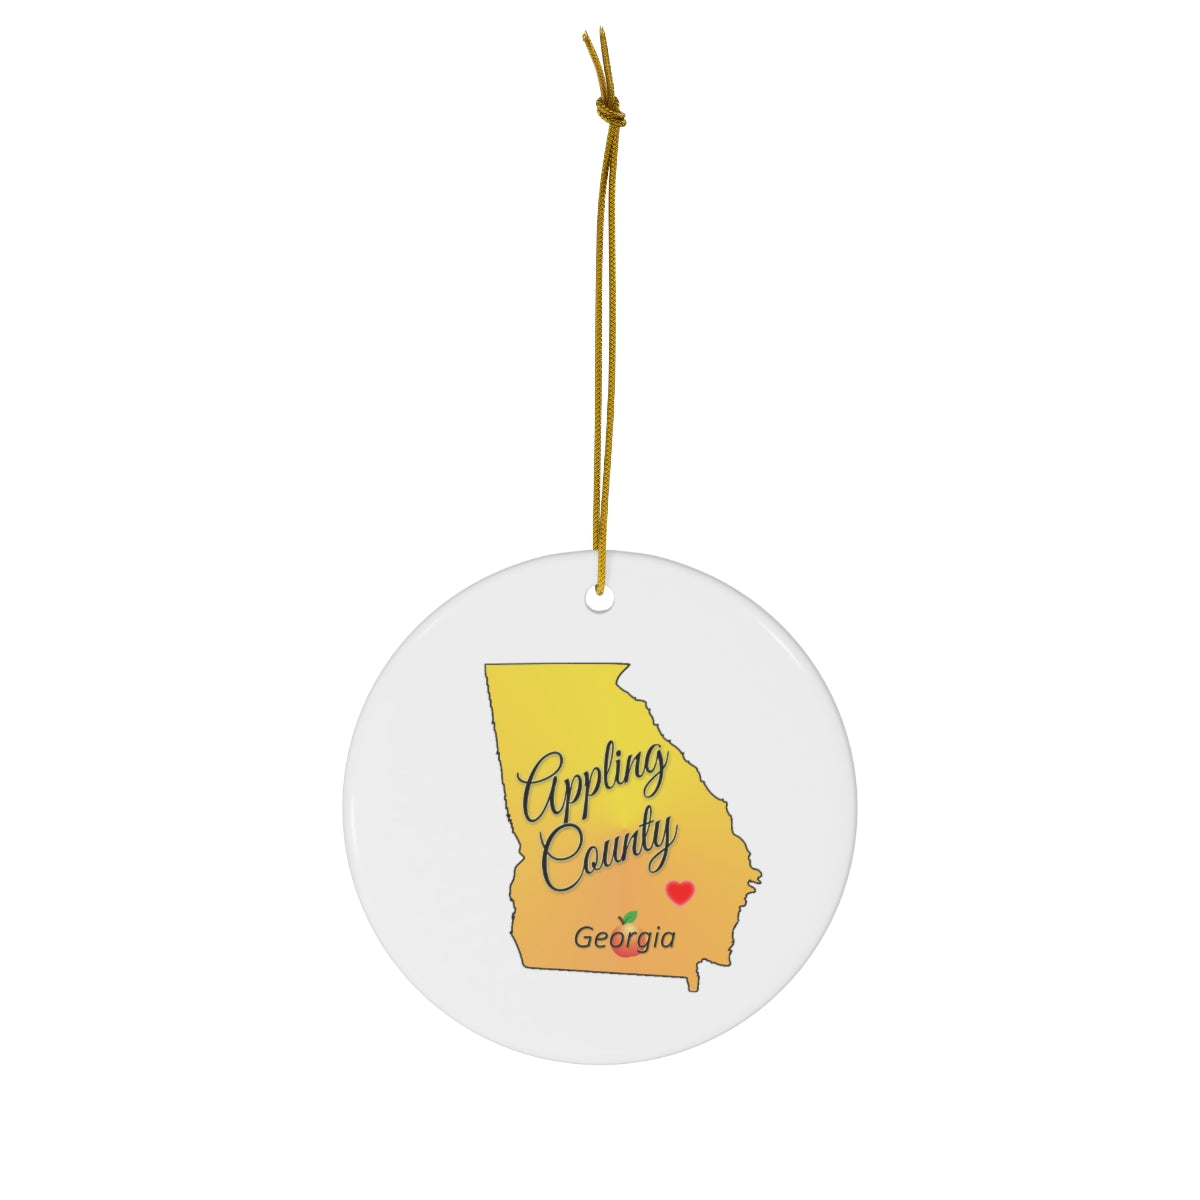 Appling County Georgia Ceramic Ornament, 1-Pack